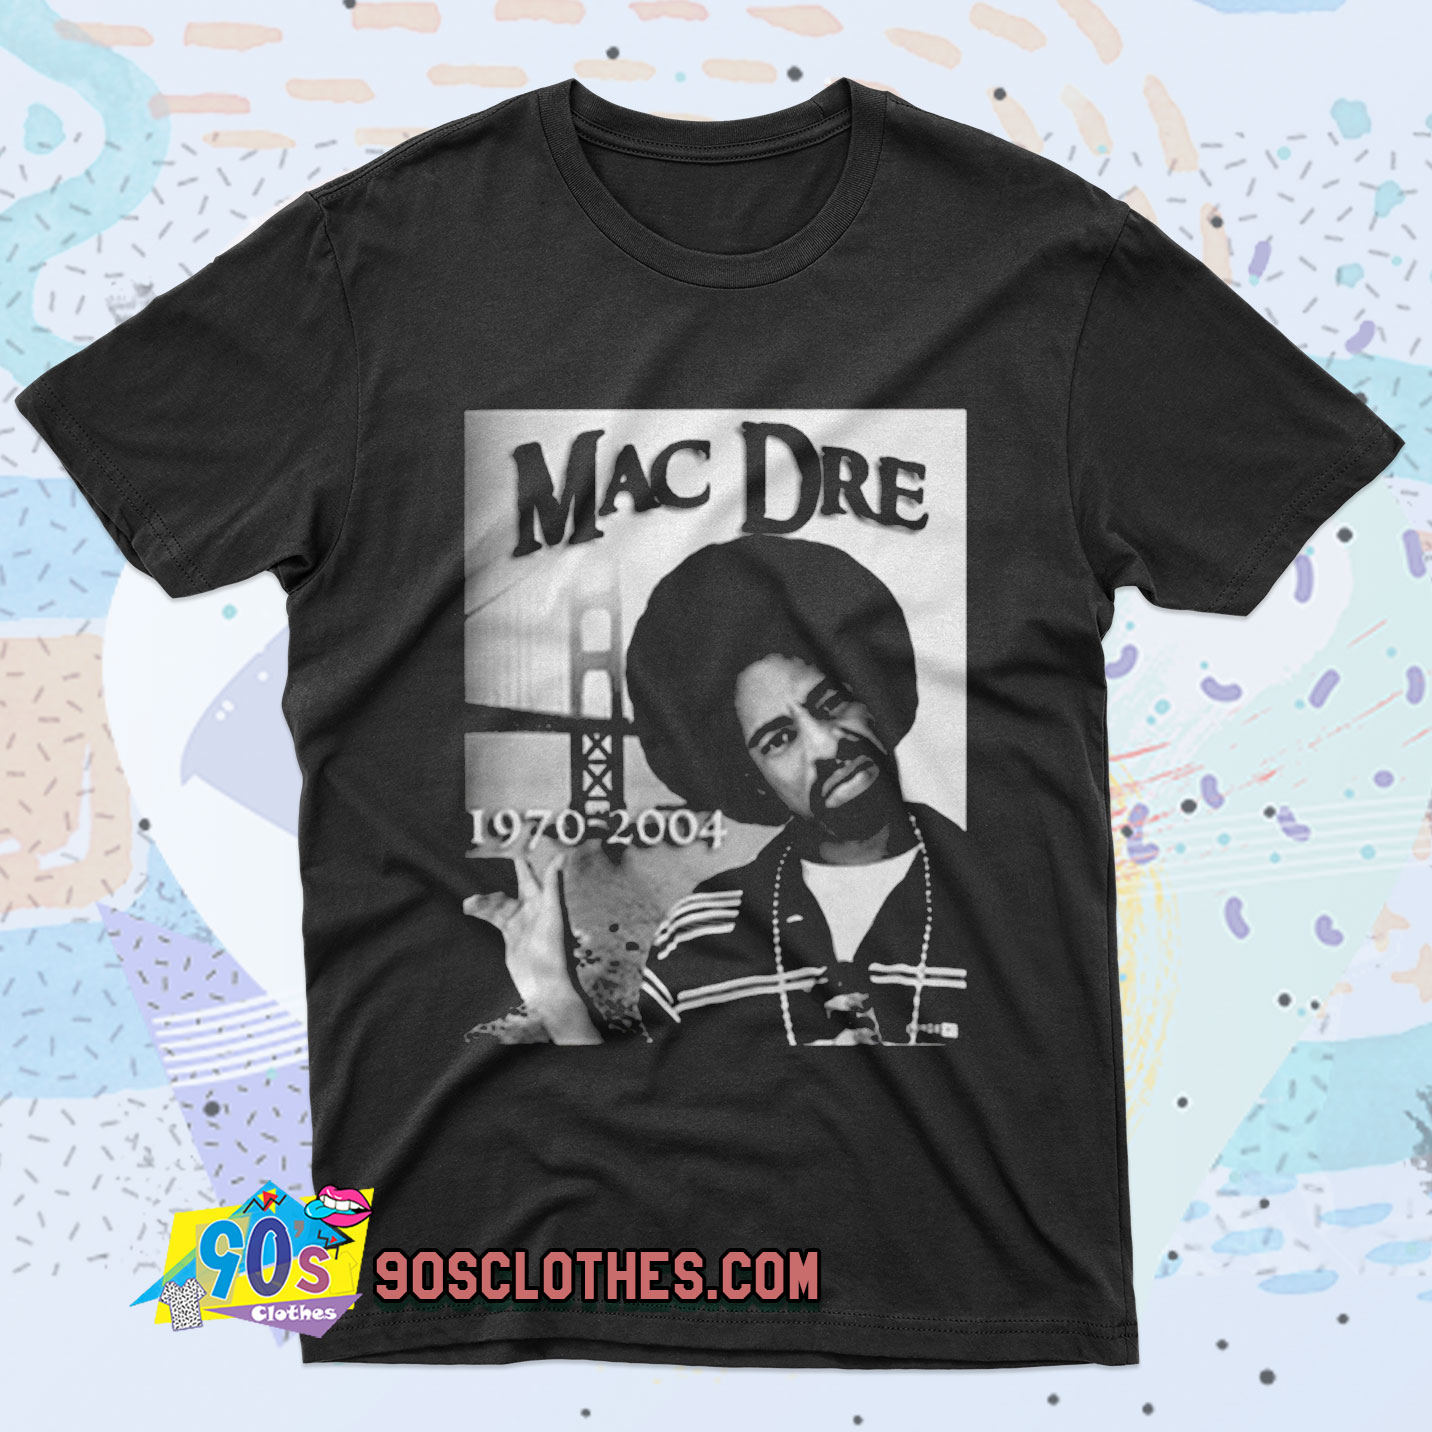 Mac Dre Thizzle Dance Fan Gifts DD193 Rapper Shirt Mac Dre Shirt Vintage Style Shirt